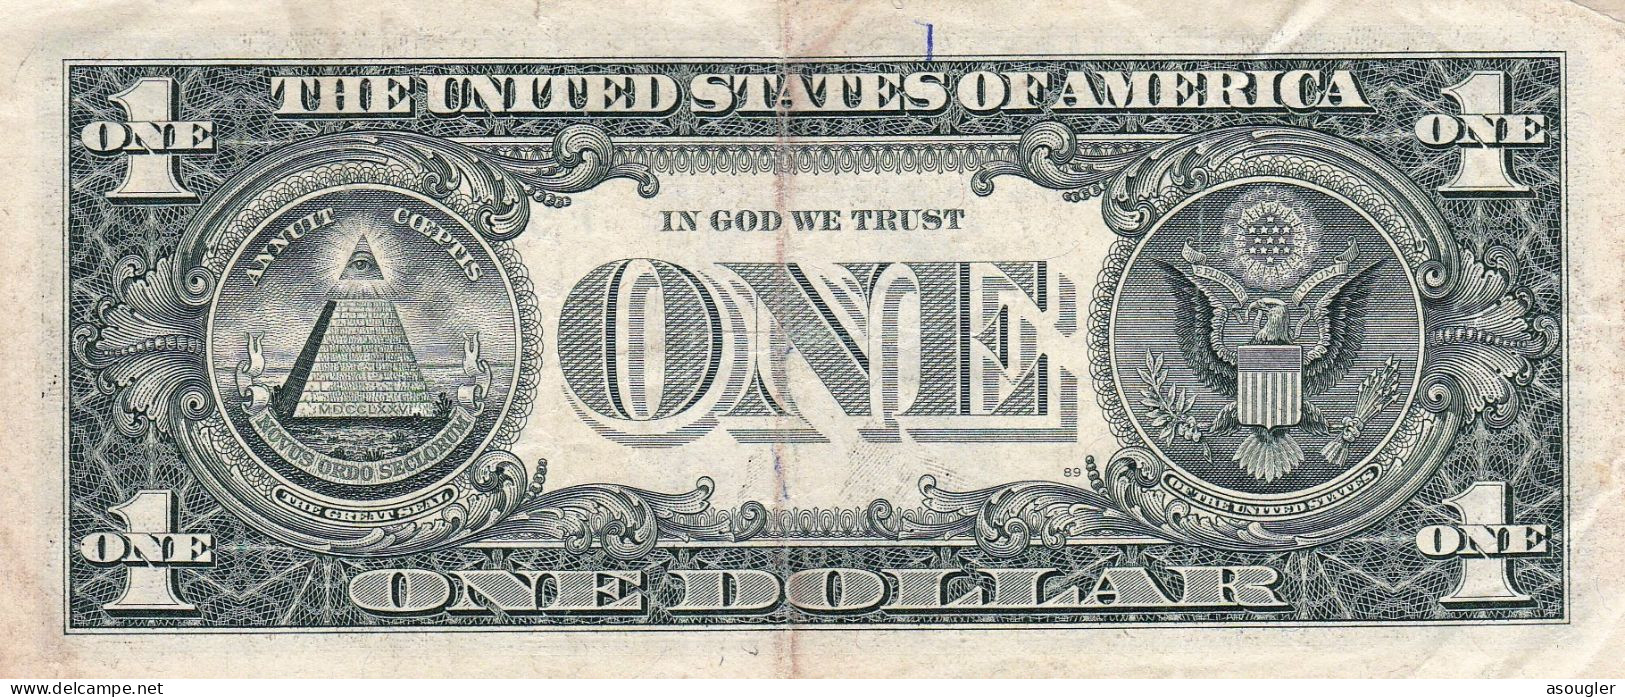 USA 1 Dollar Of Federal Reserve Notes 2013 ATLANTA  F-L  VF "free Shipping Via Regular Air Mail (buyer Risk)" - Bilglietti Della Riserva Federale (1928-...)